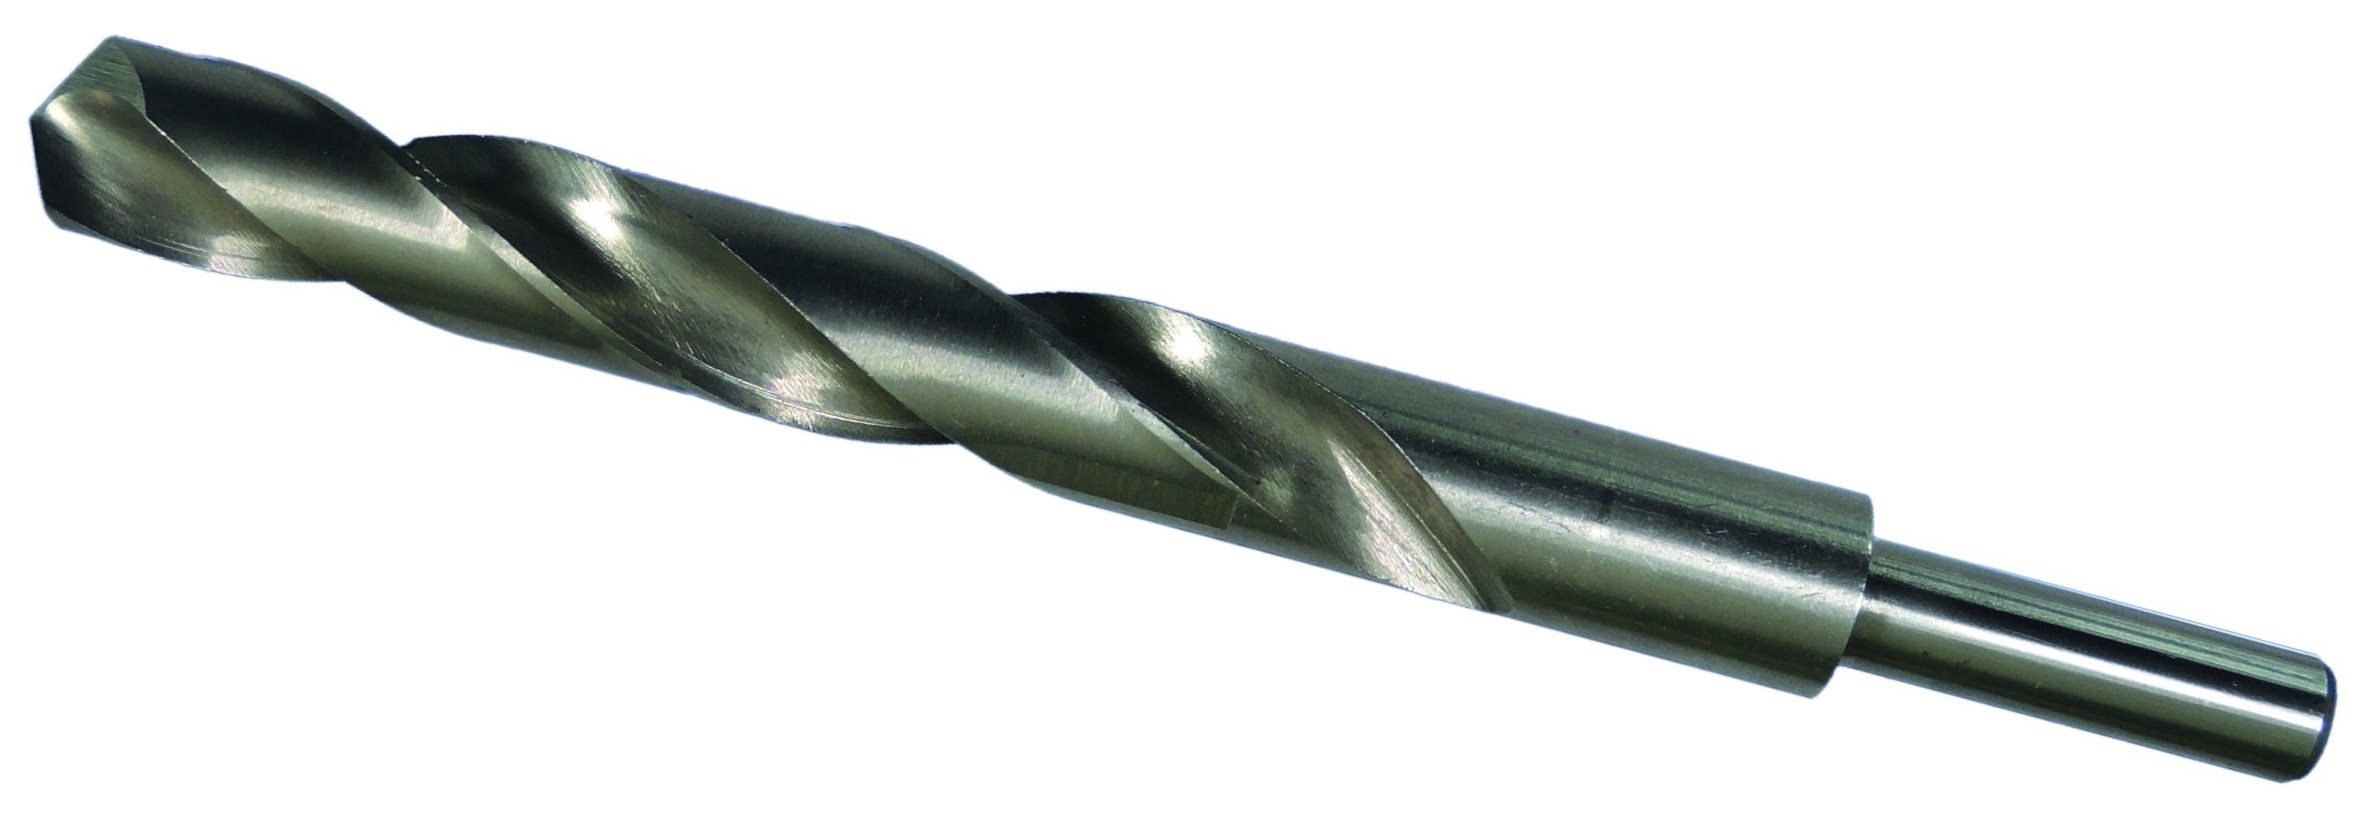 1 x HSS-G Spiralbohrer 10,5 mm Metallbohrer HSSG geschliffen Schaft REDUZIERT 